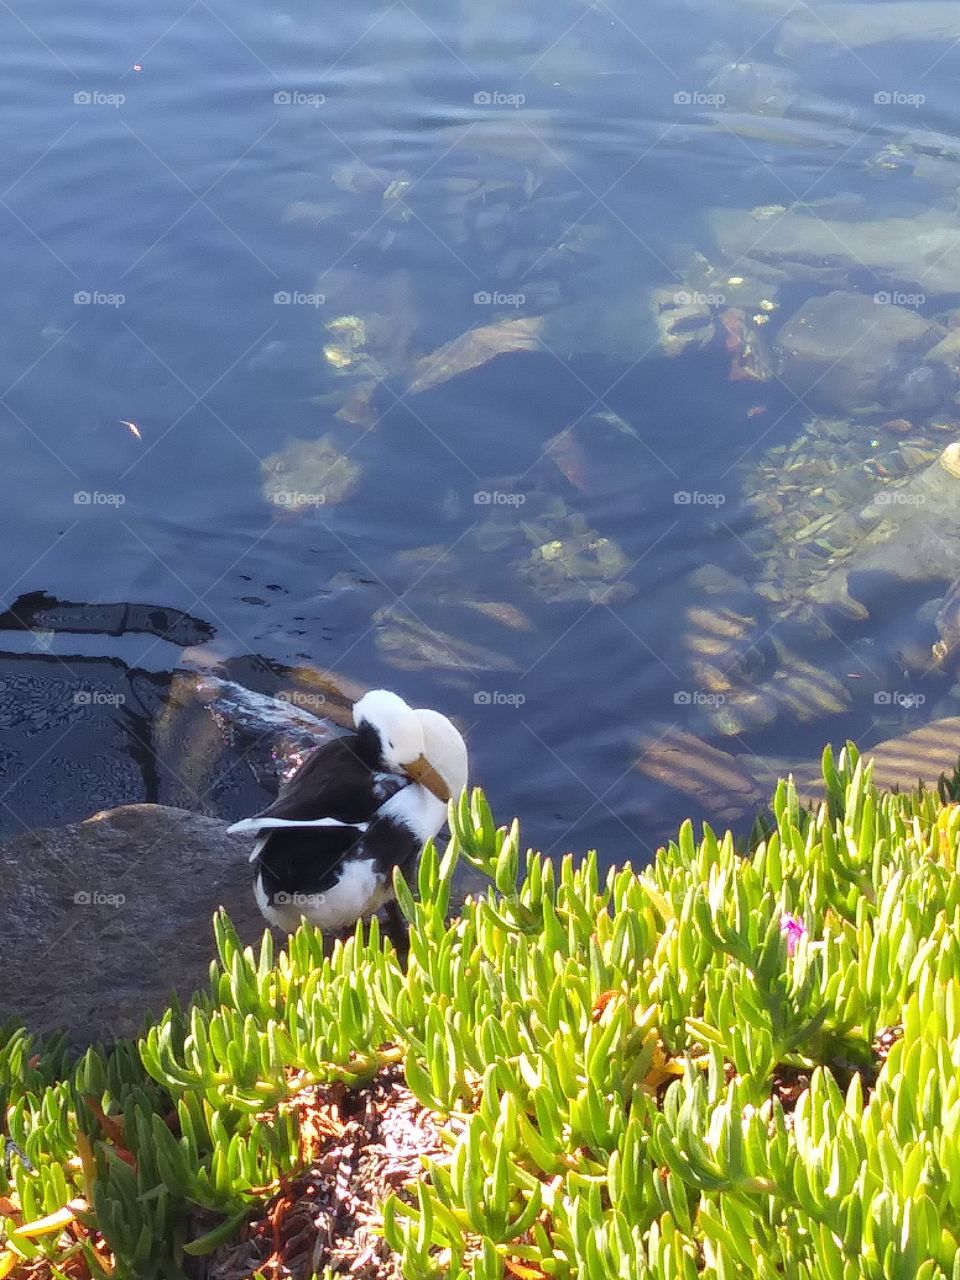 grooming duck by water